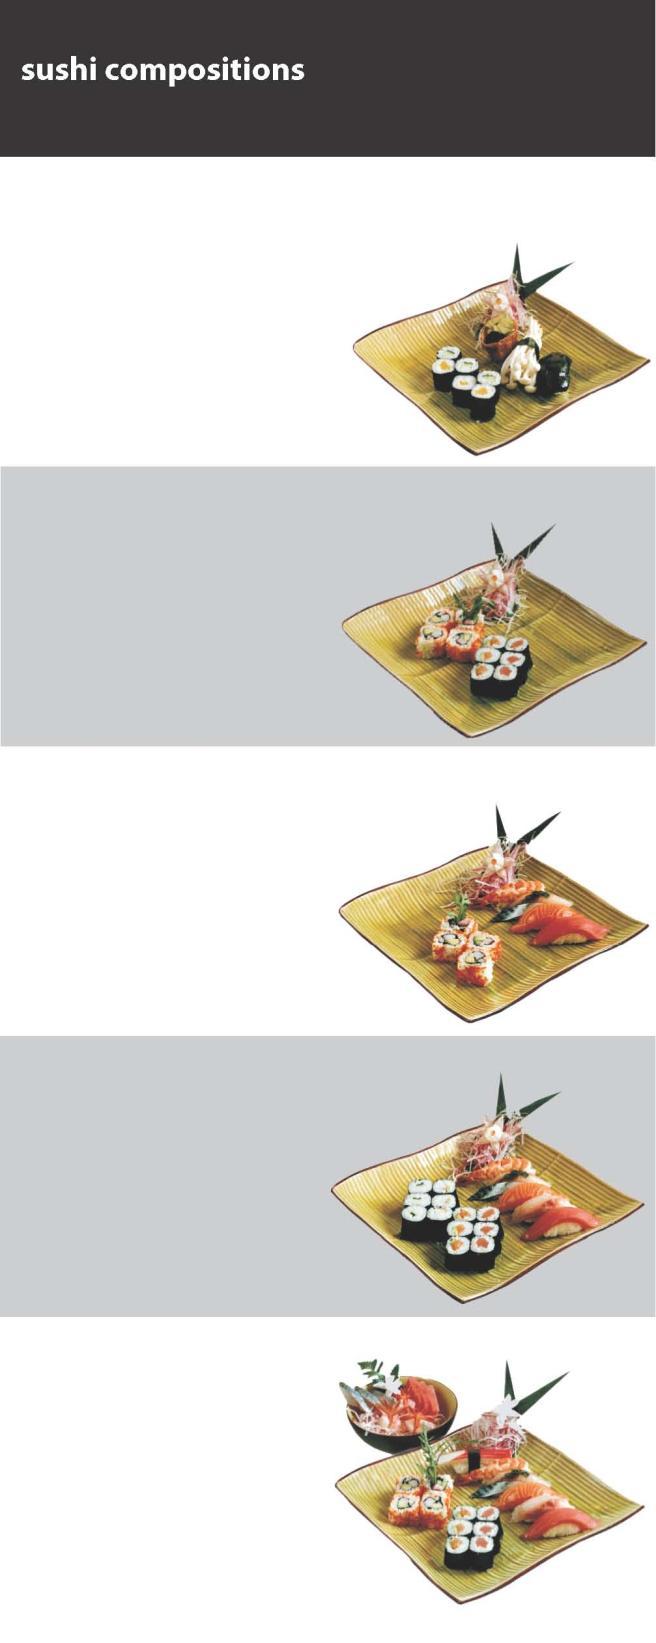 sushi compositions 20. Wood Shark 3,90 3,50 (vegetarisch!) A 12 gemischte Maki B 6 gemischte Maki, 4 Inside Out Rolls C 3 Nigiri, 6 gemischte Maki 21.